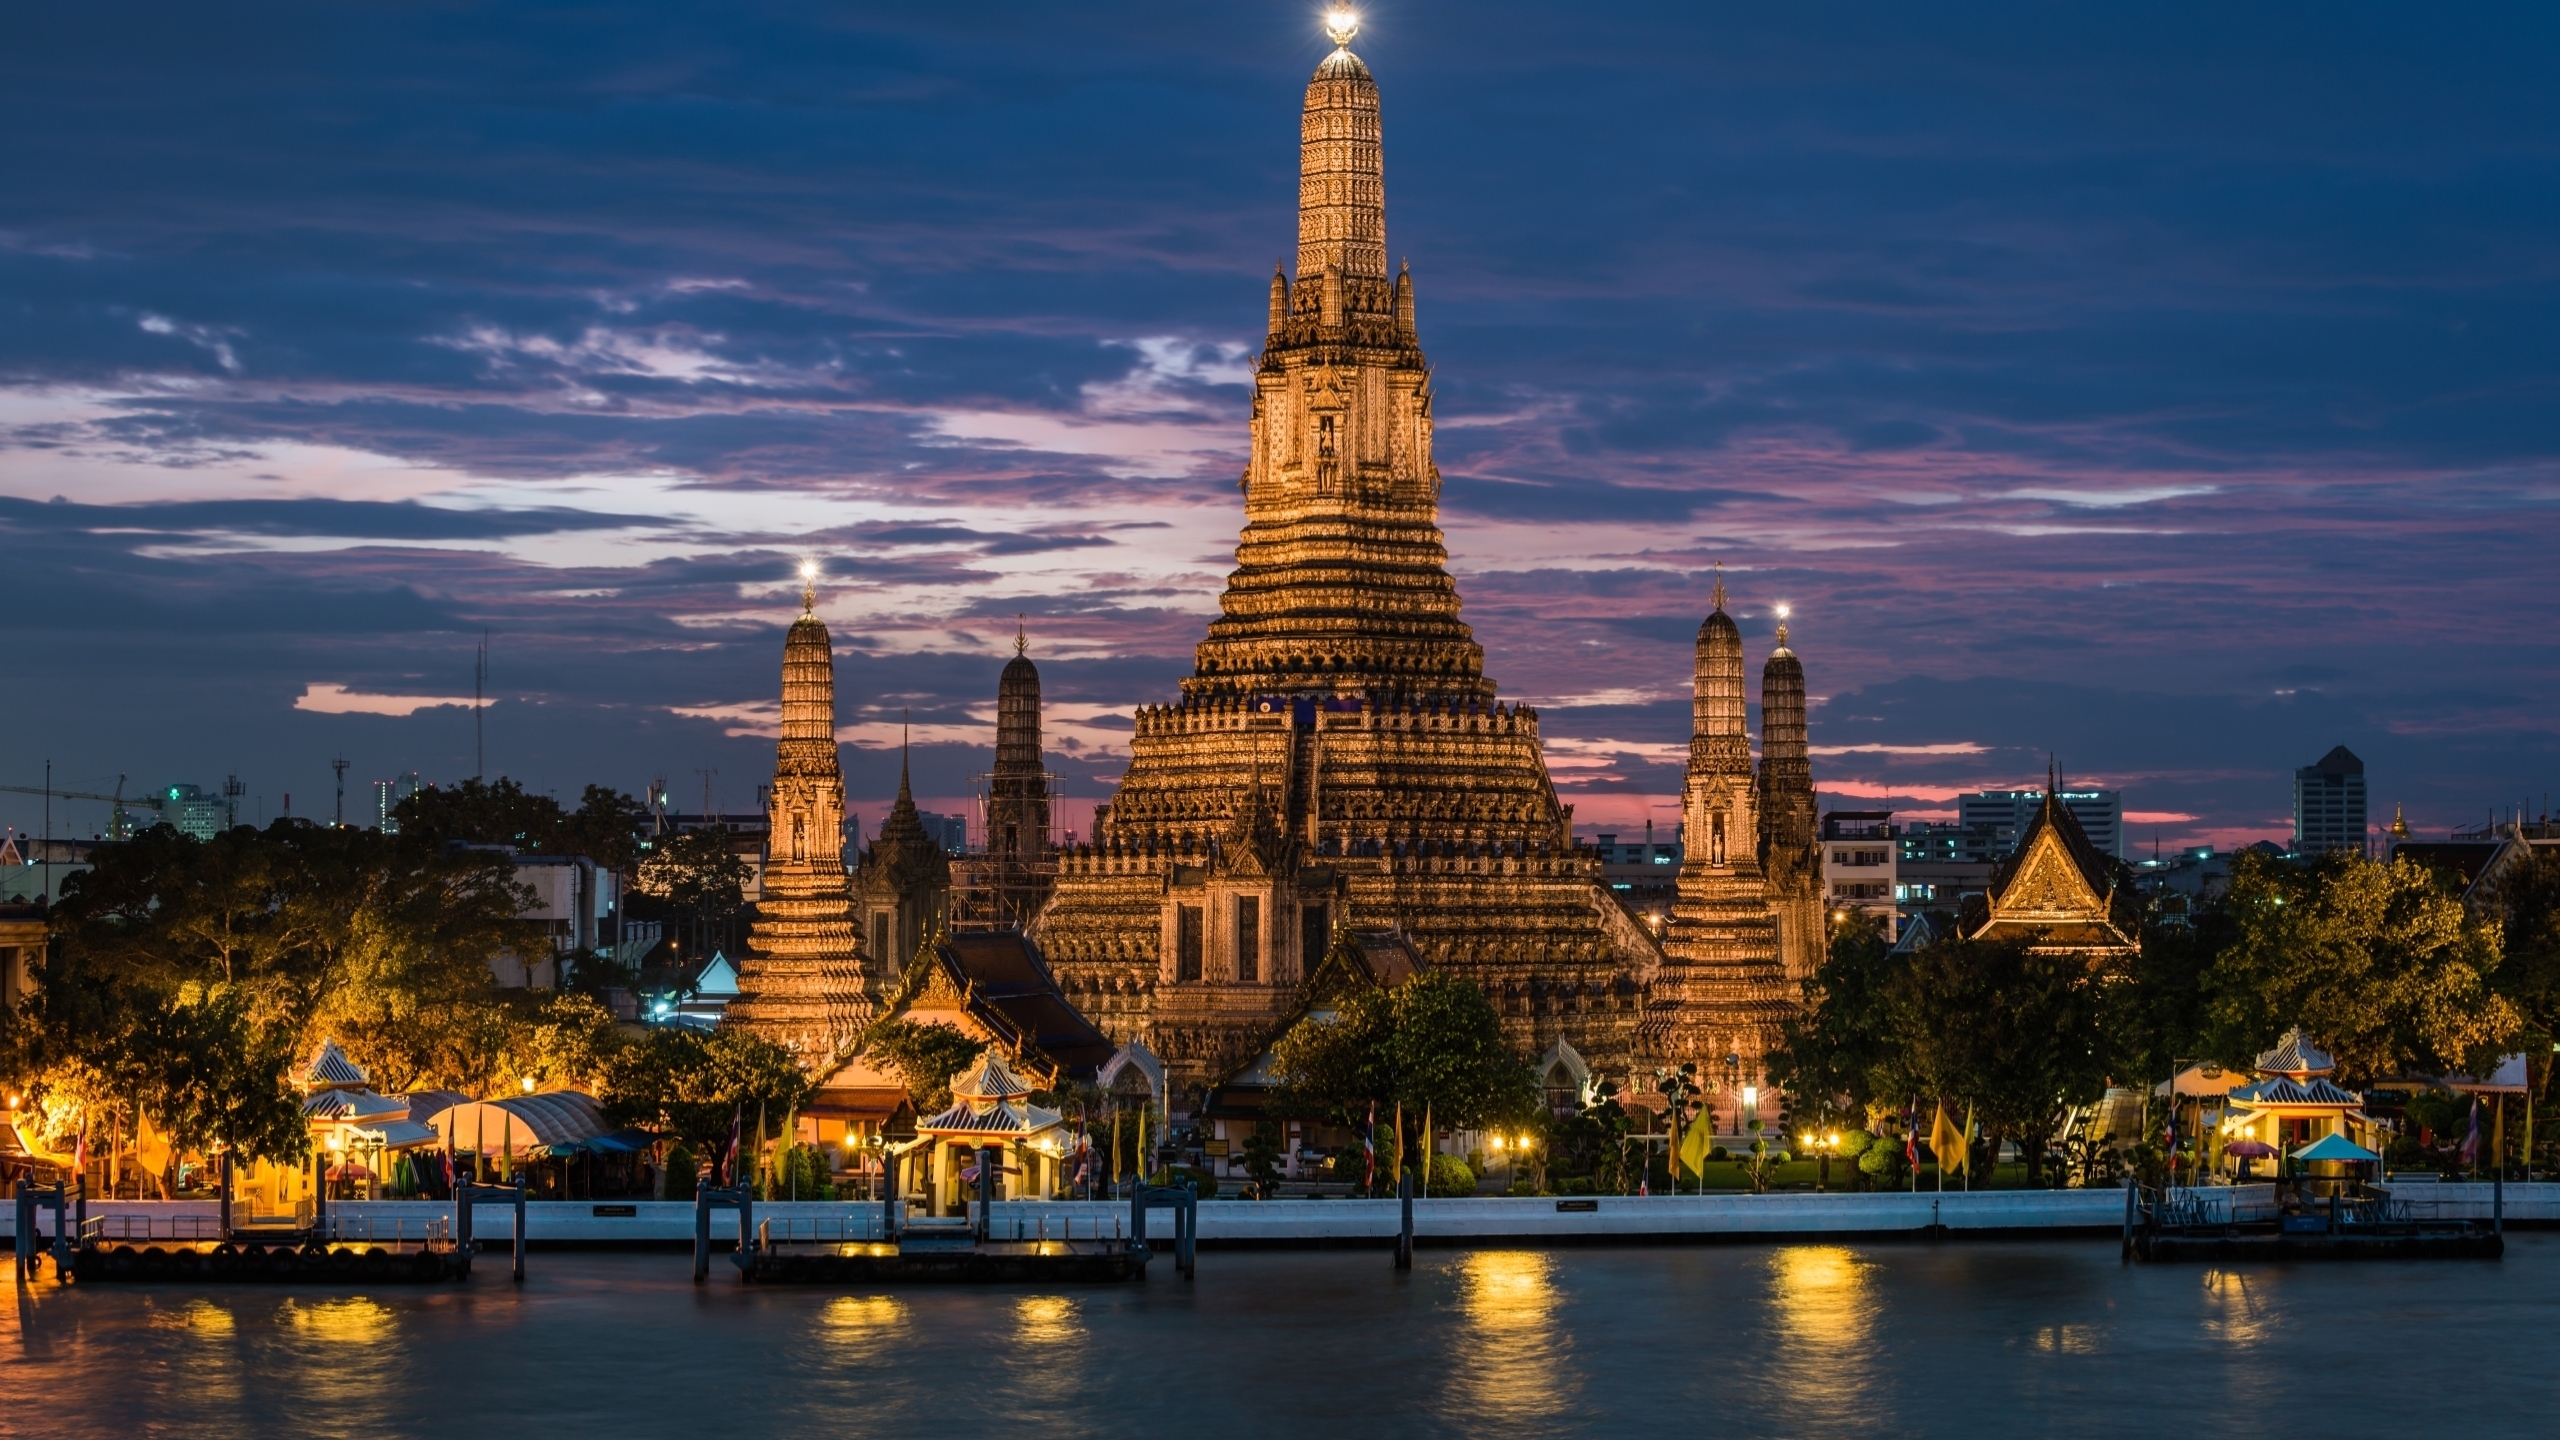 Wat Arun at Night for 2560x1440 HDTV resolution